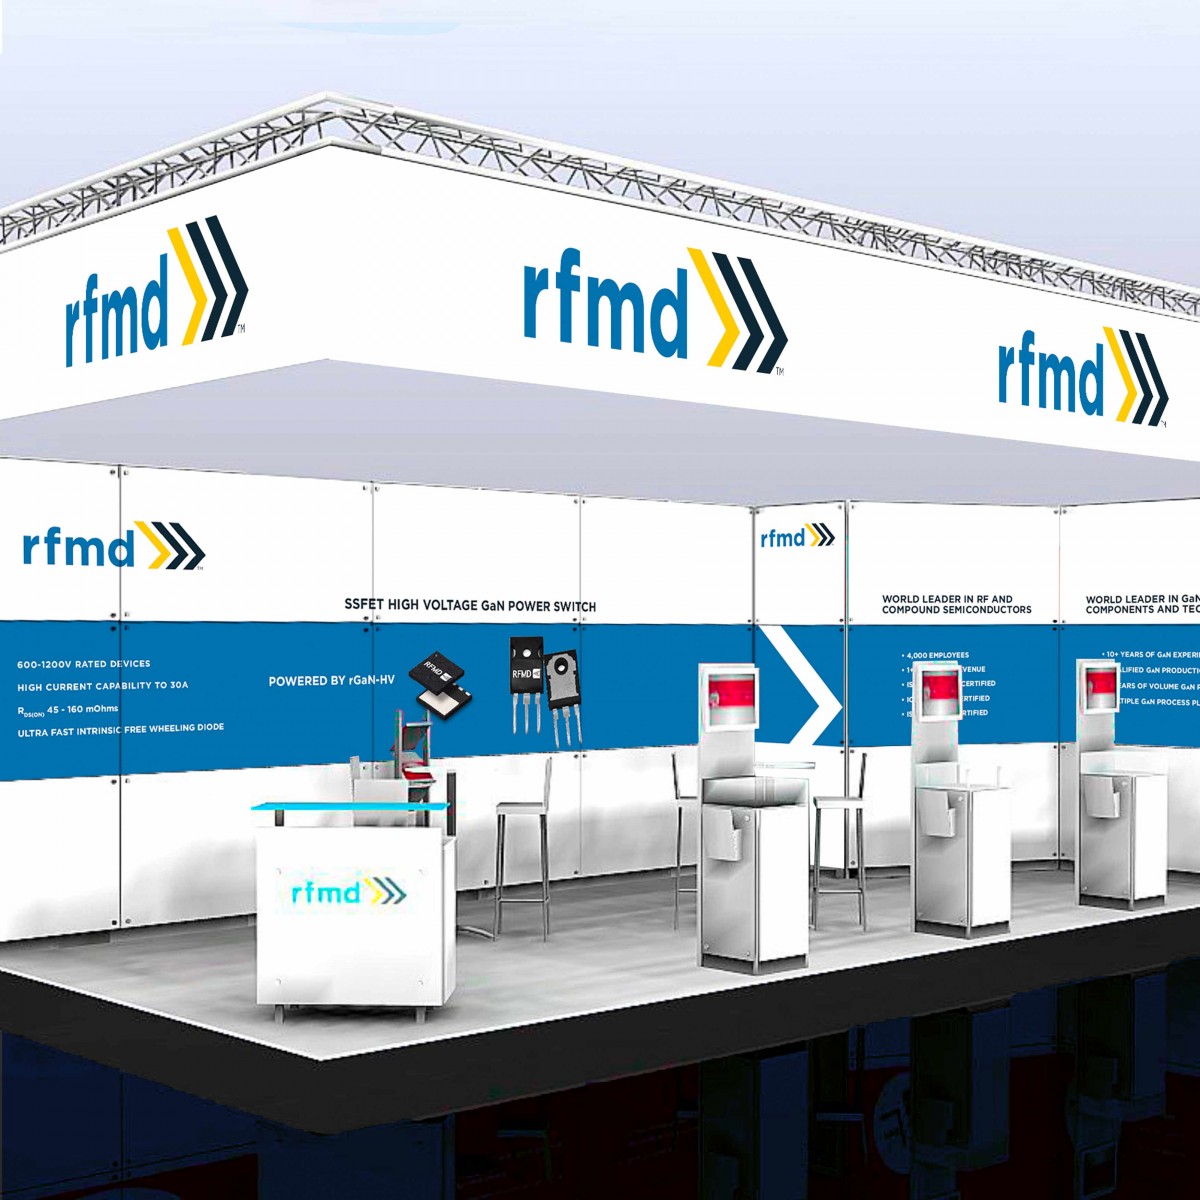 RFMD PCIM booth display